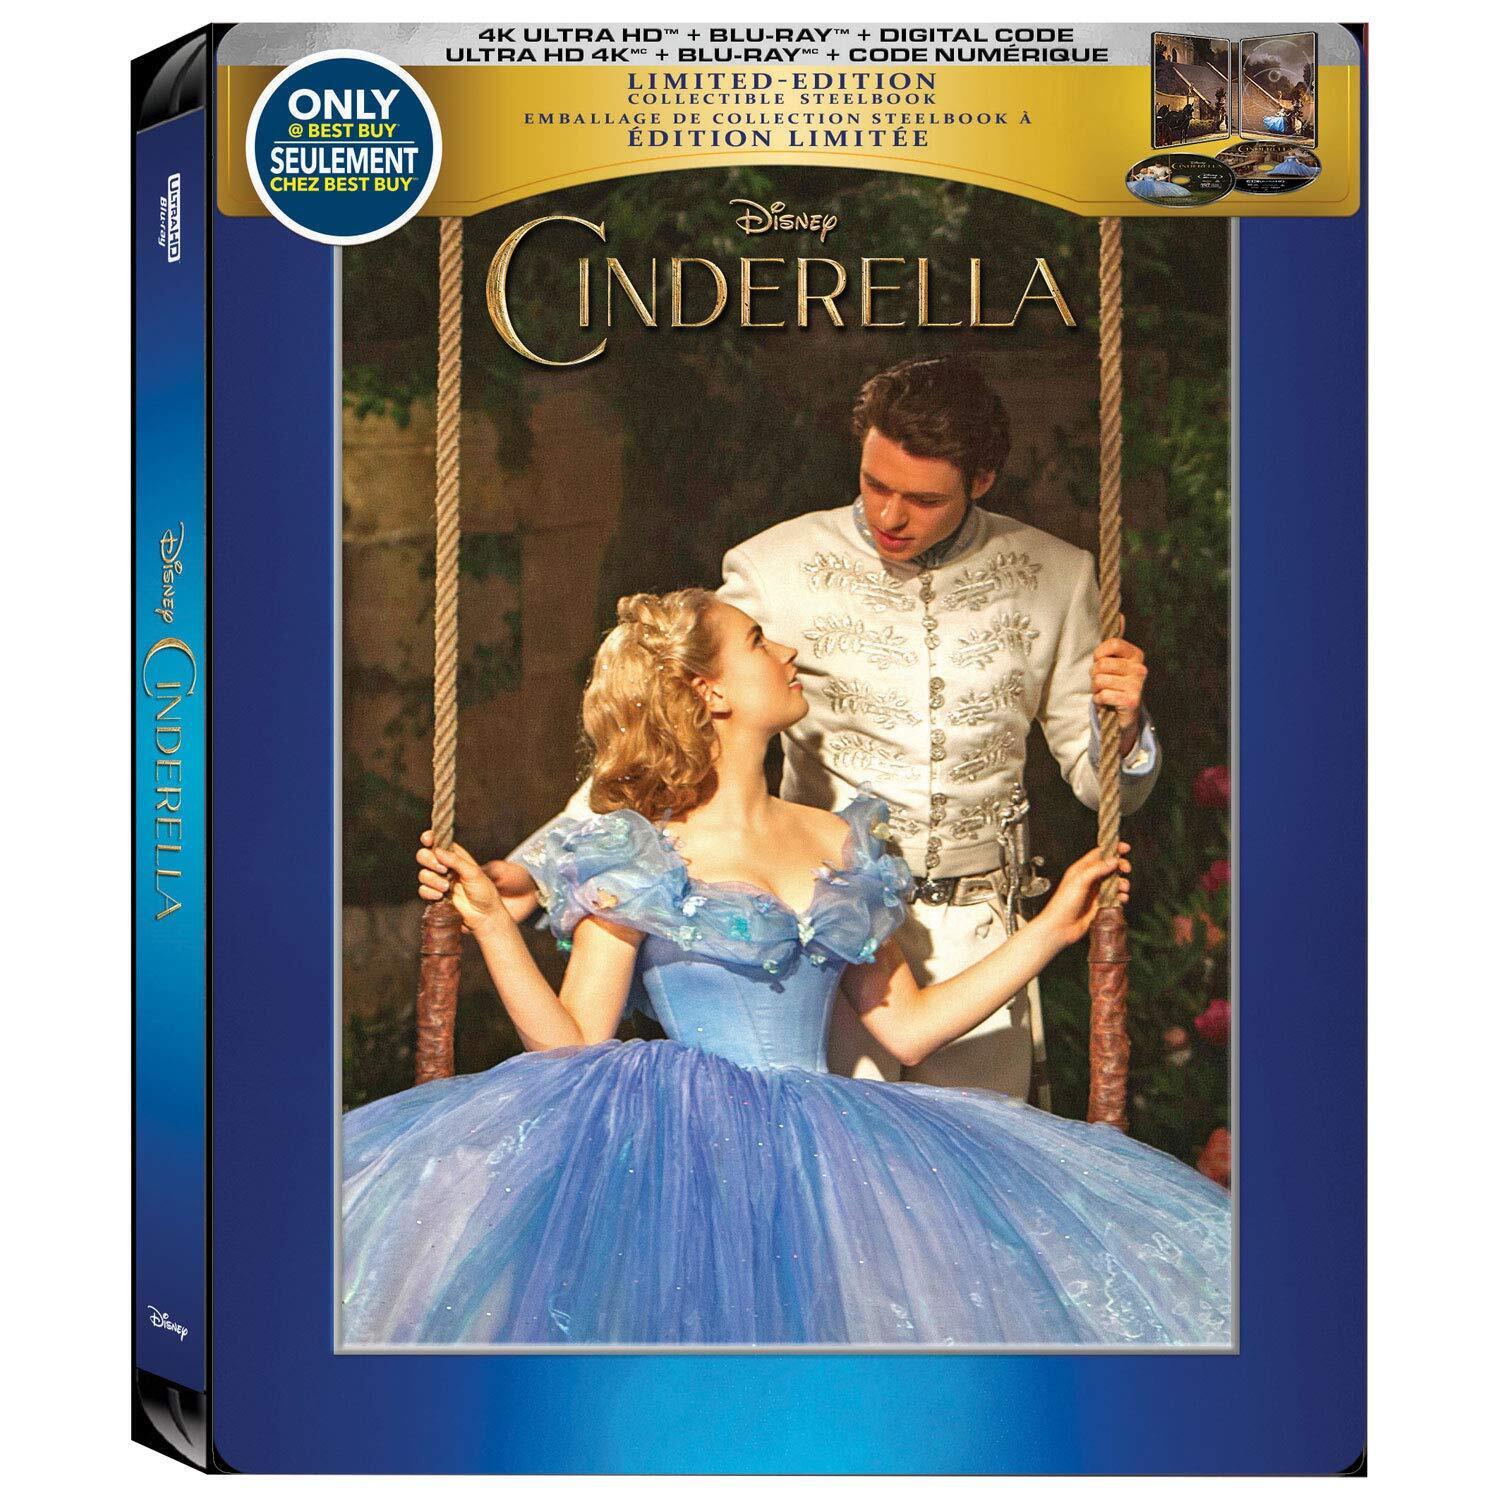 Disney Cinderella 2015 4k Ultra Hd + Blu-ray Limited Edition Best Buy Steelbook